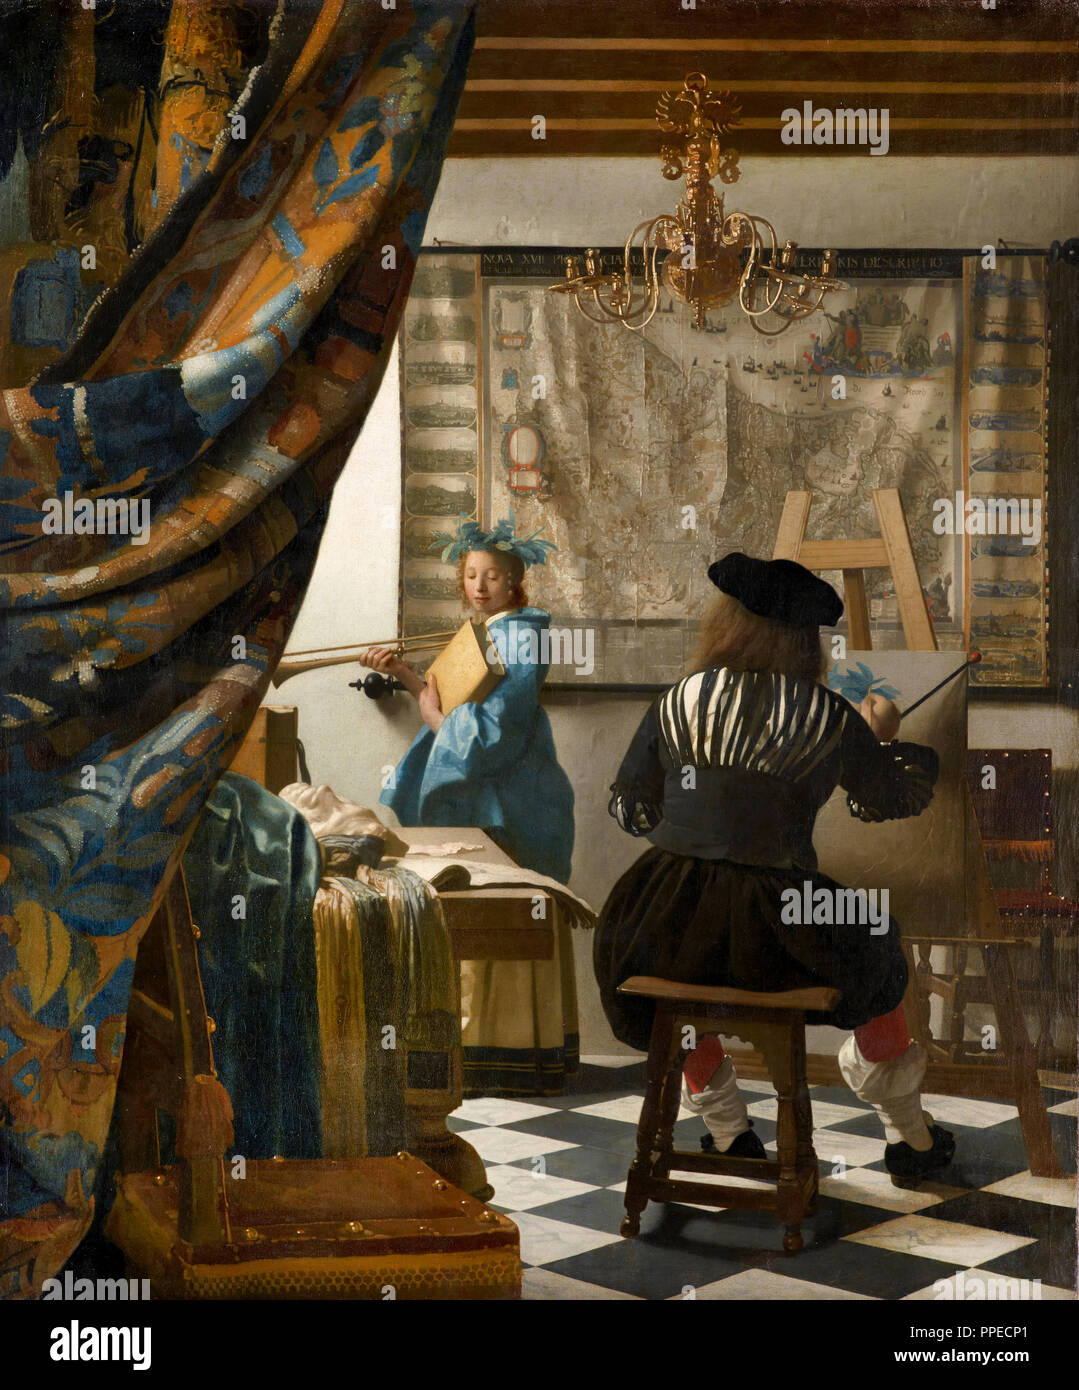 Johannes Vermeer - l'arte della pittura. Circa 1666-1668. Olio su tela. Kunsthistorisches Museum, Vienna, Austria. Foto Stock